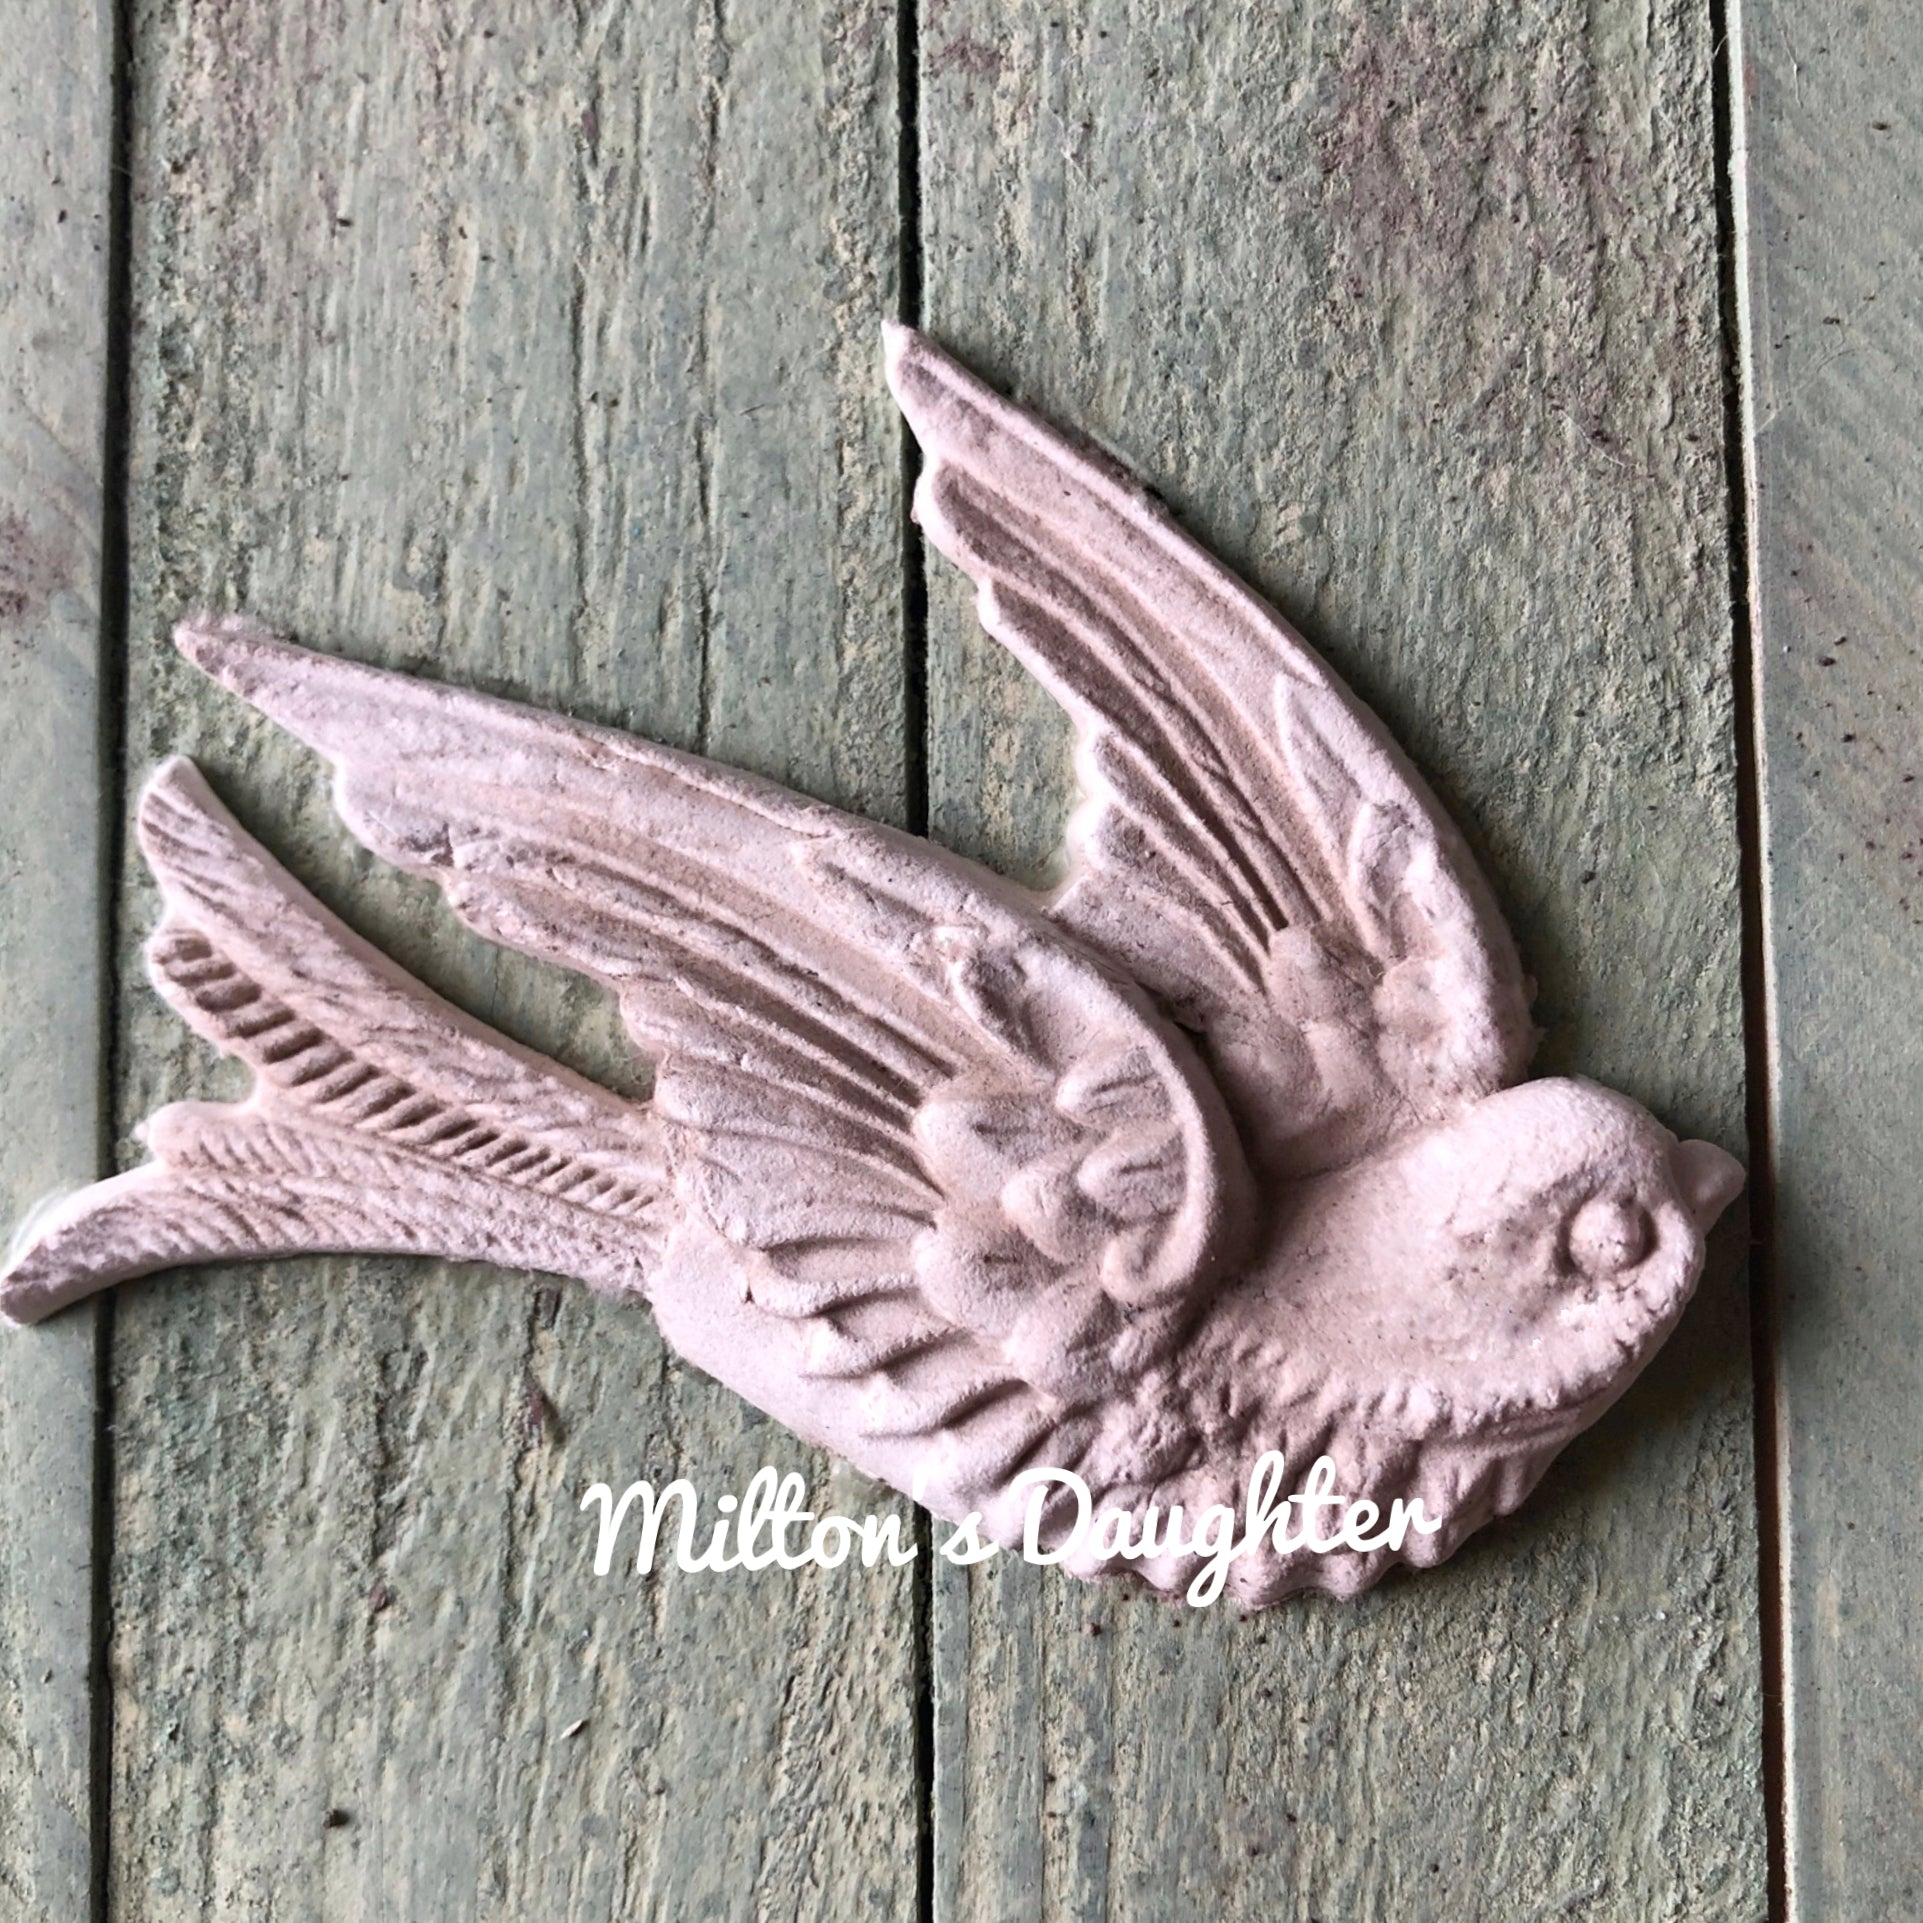 IOD Birdsong mold casting of bird in flight at Milton's Daughter